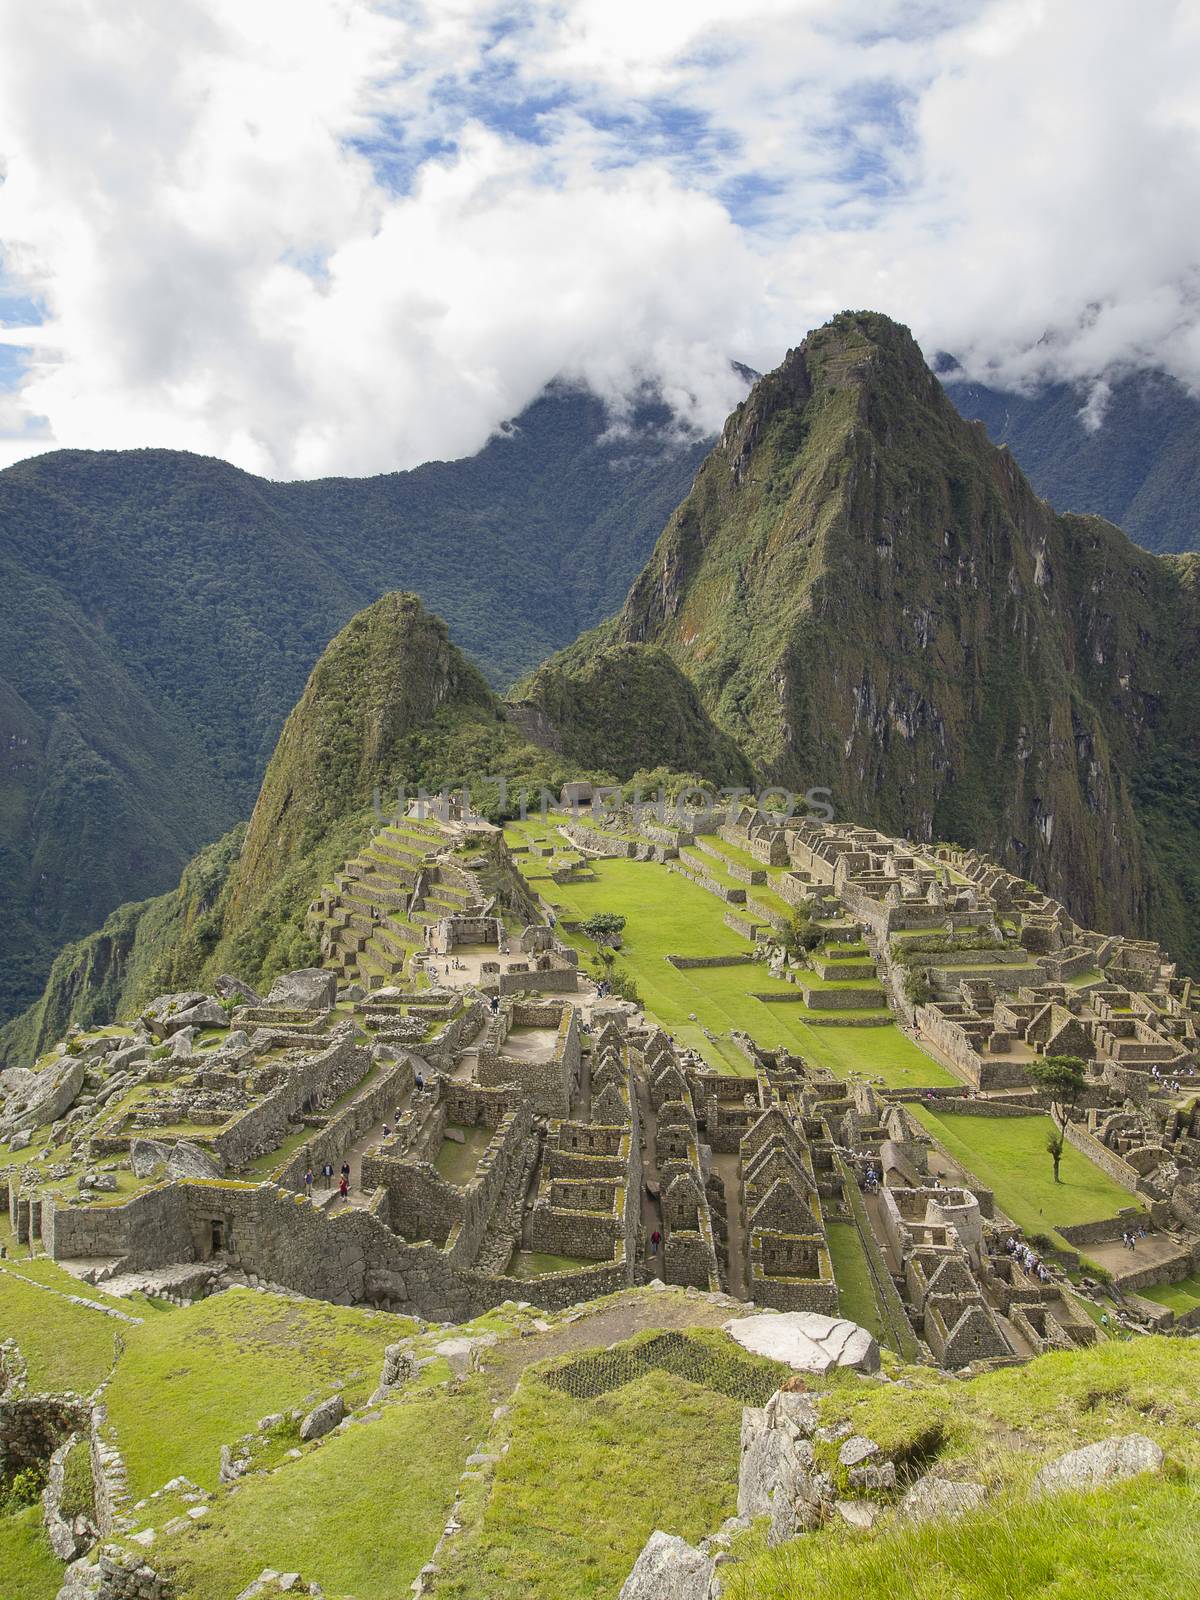 Machu Picchu, the pre-columbian city of Inca